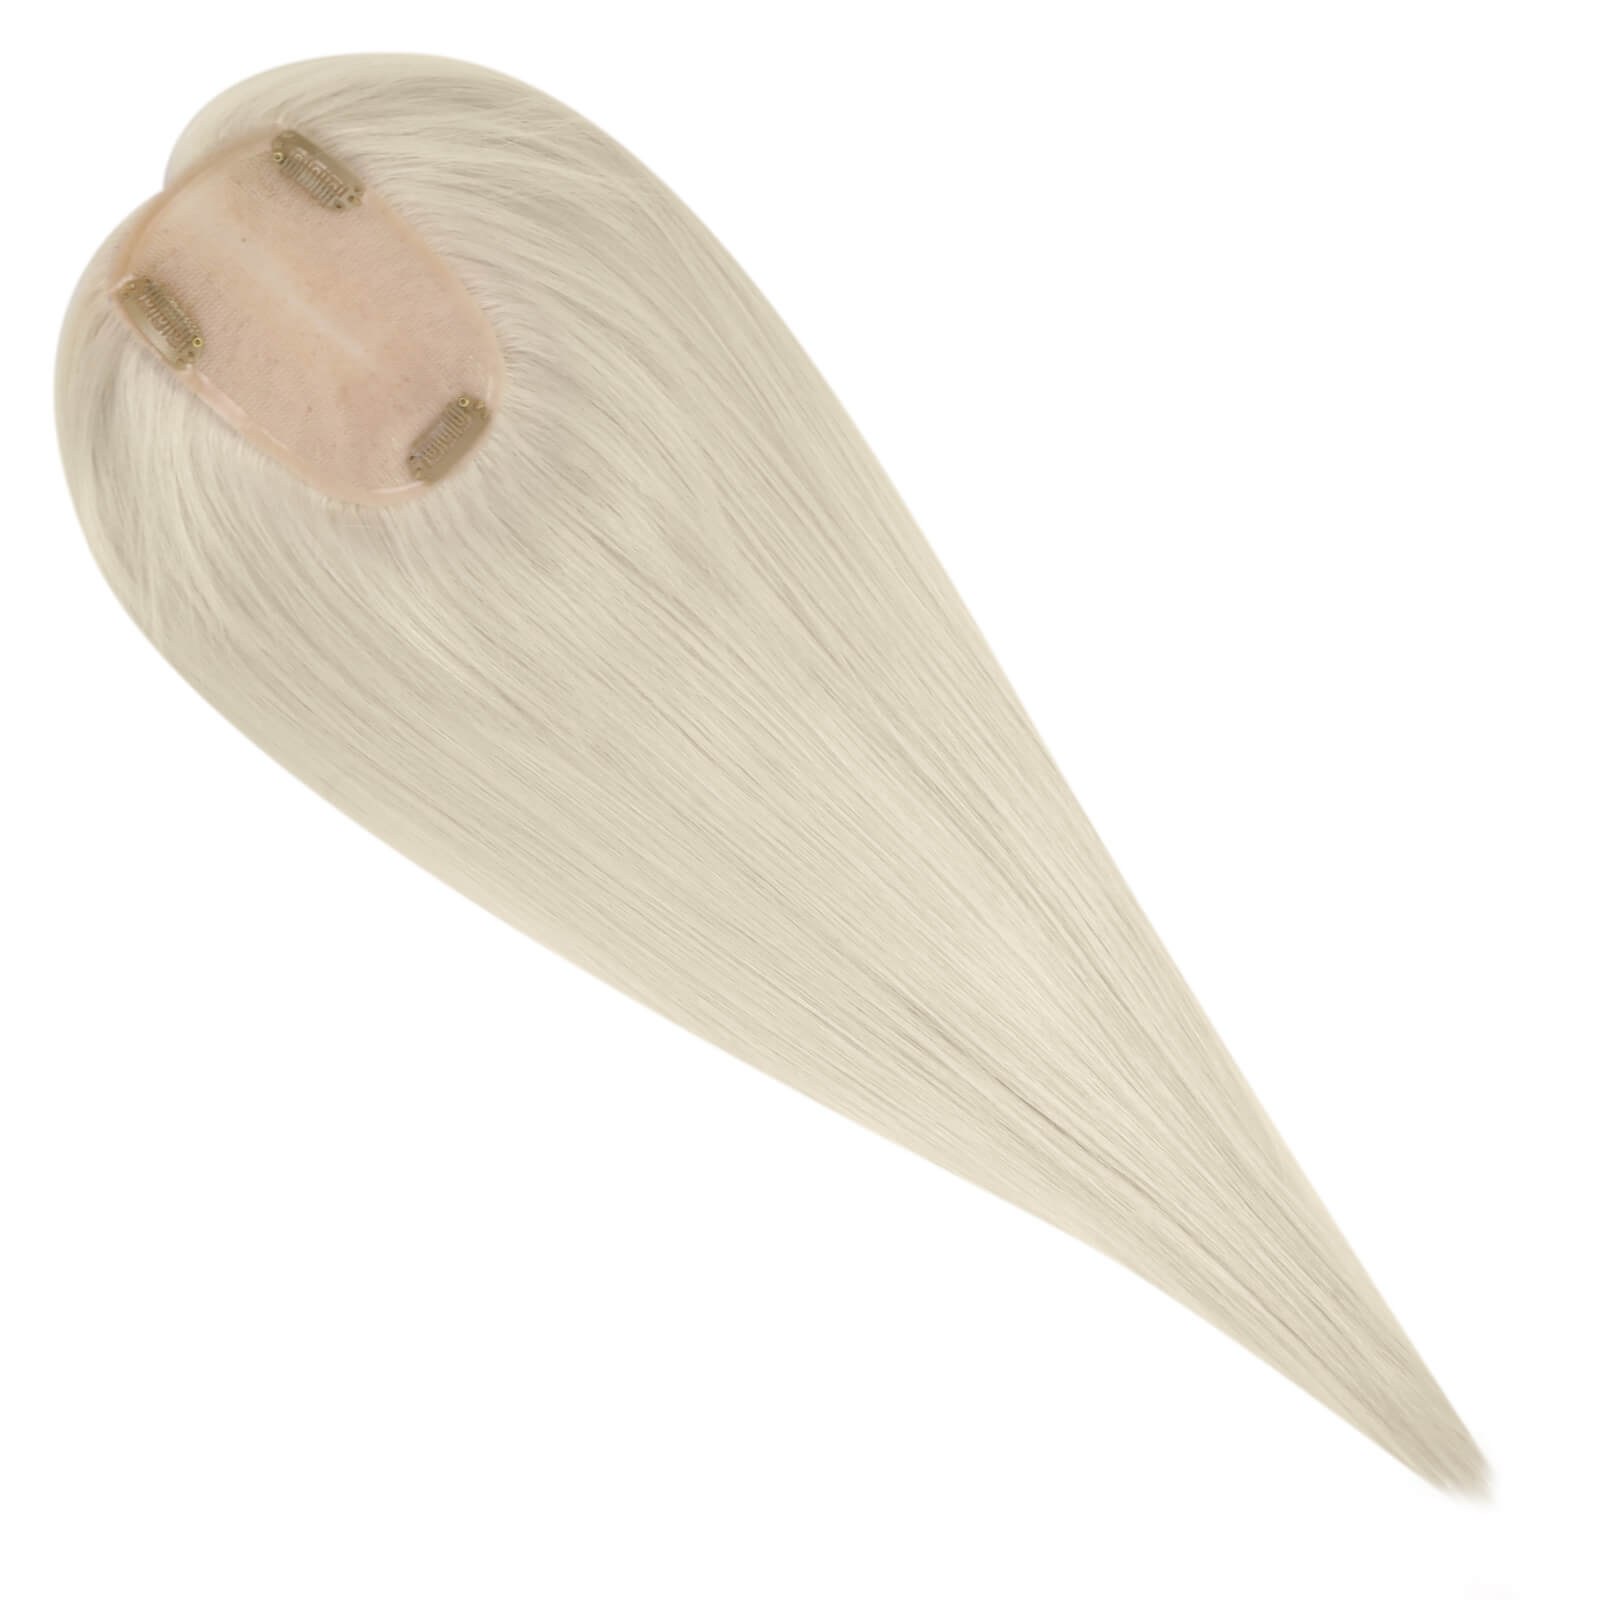 hair extensions crown human hair platnium blonde